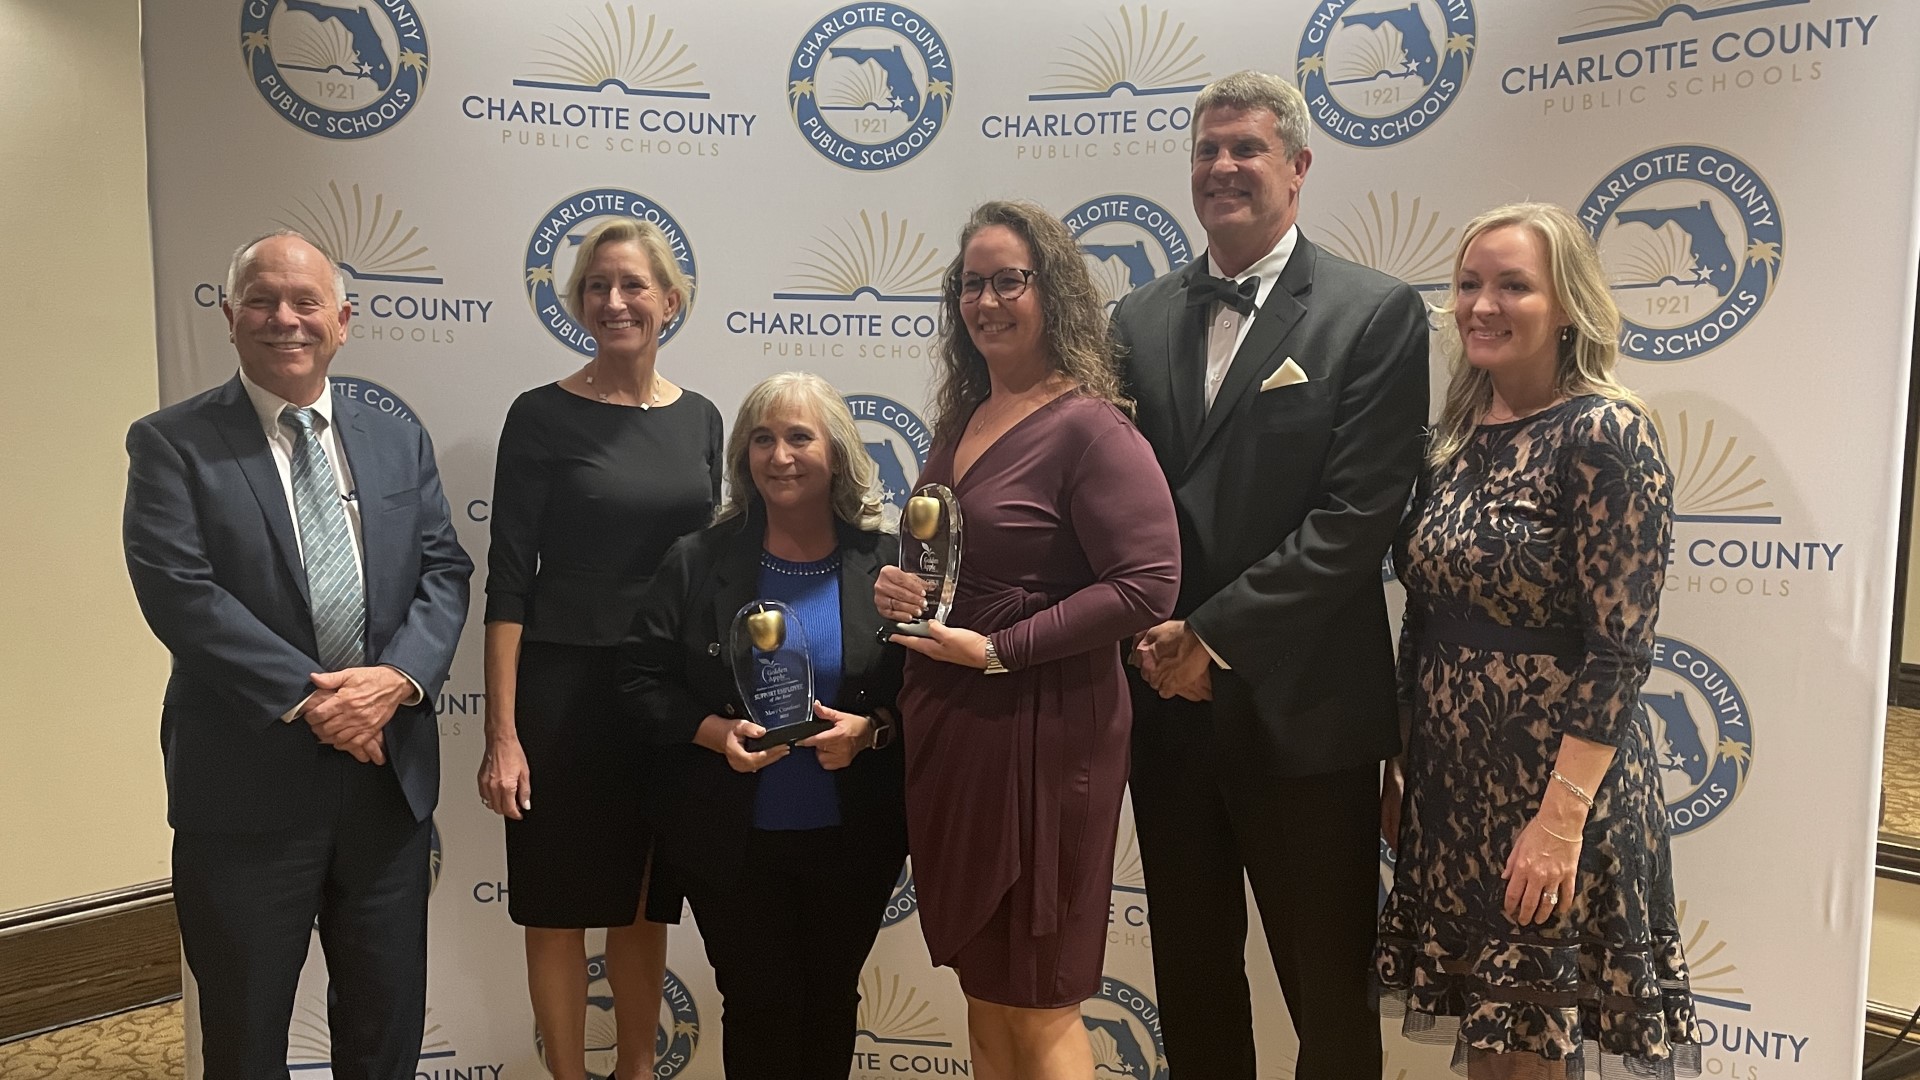 Winners announced for Charlotte County Golden Apple